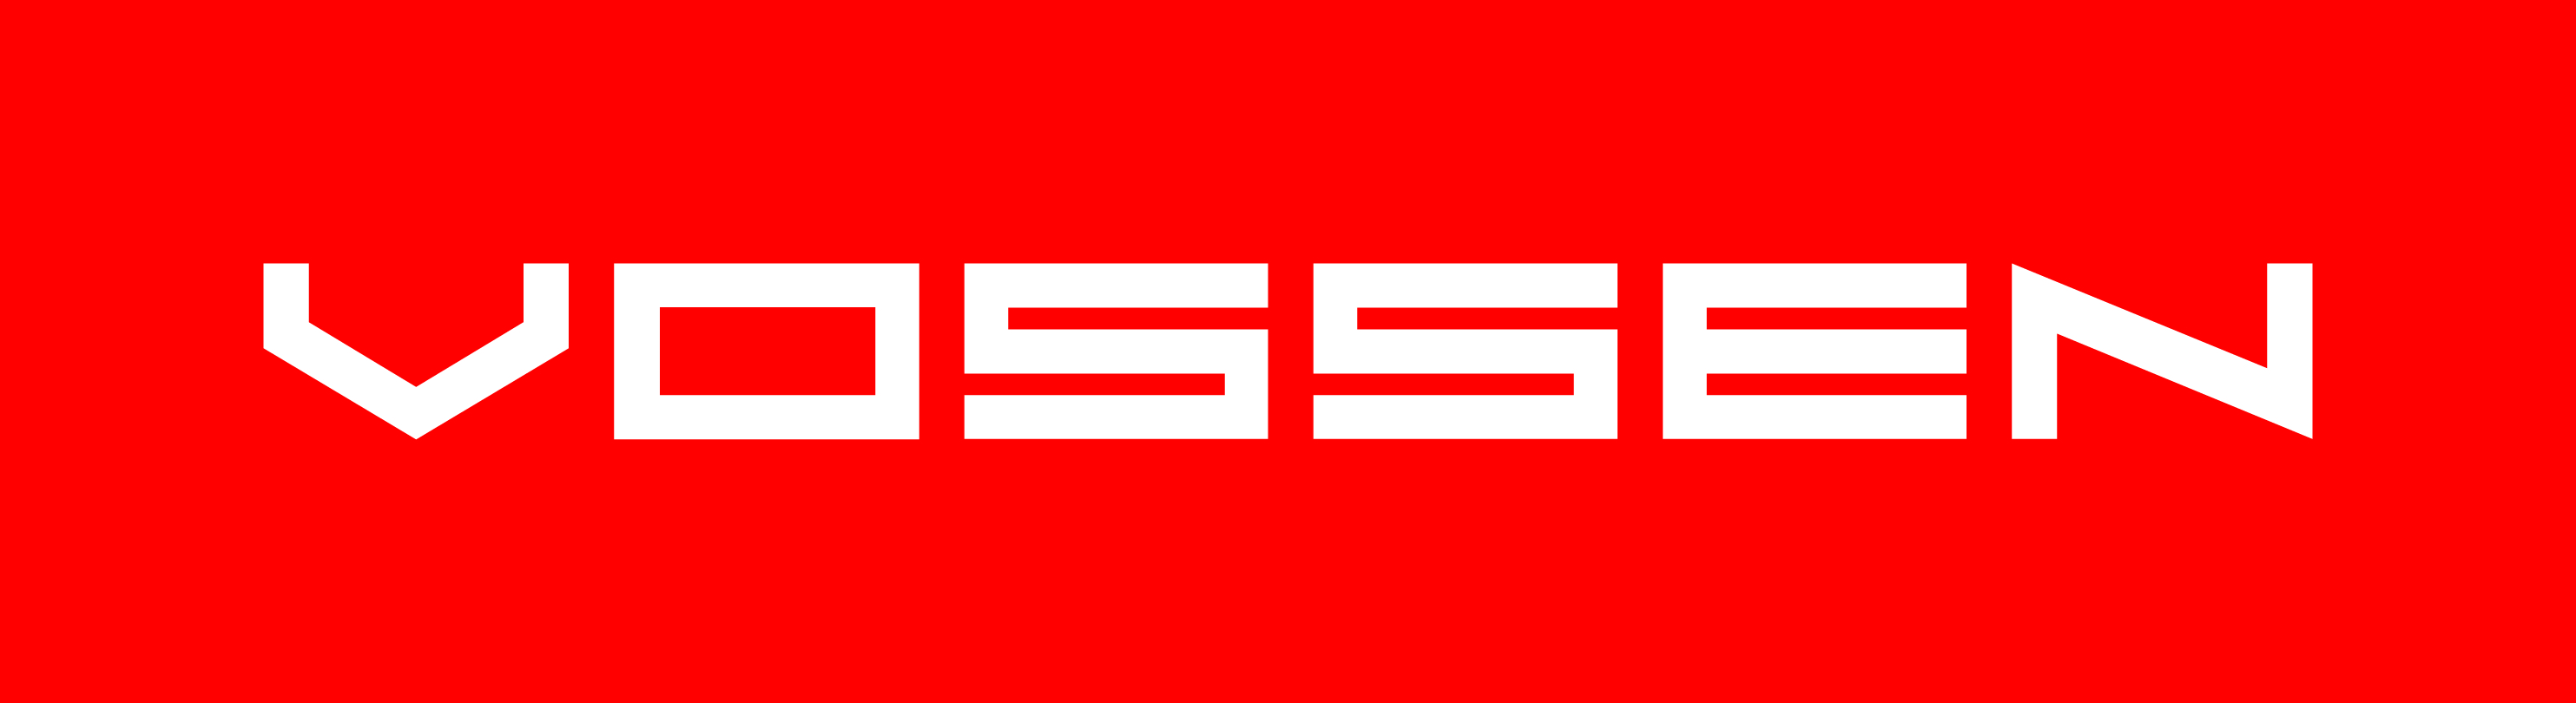 Vossen_Logo_Slab.jpg